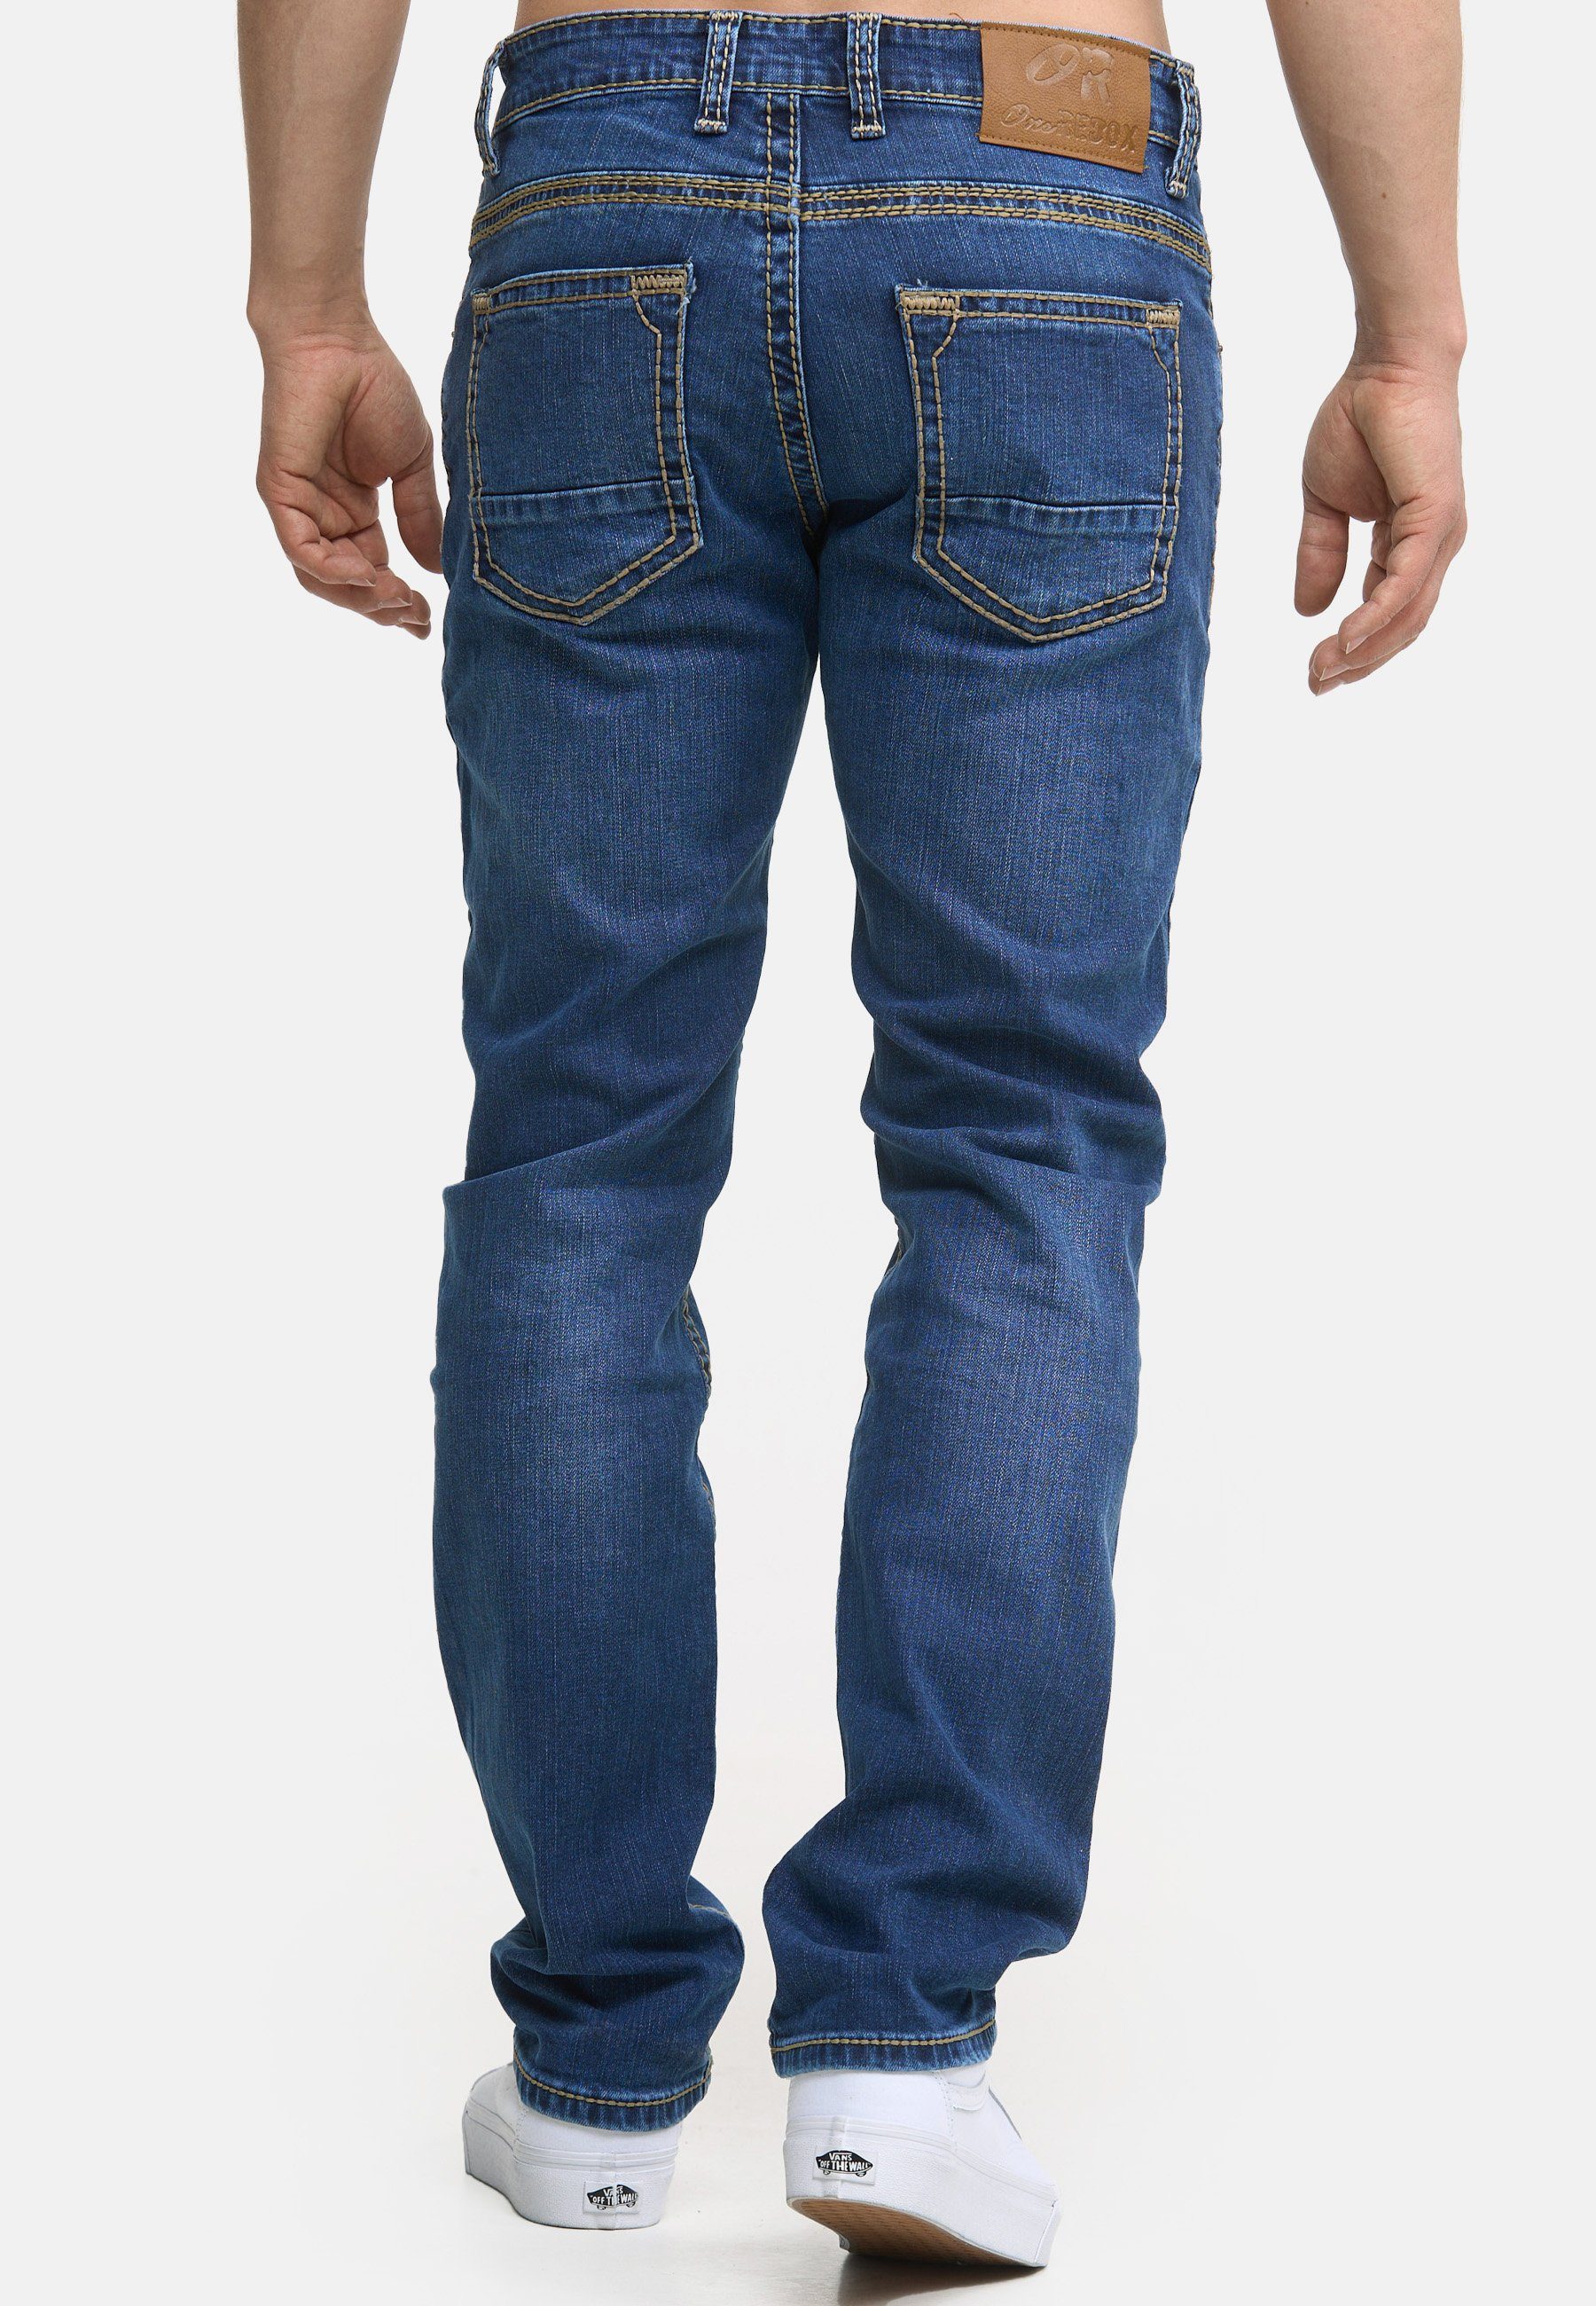 Code47 Five Code47 Hose blue Männer Bootcut Herren 905 Pocket Denim Regular-fit-Jeans Fit Jeans medium Regular